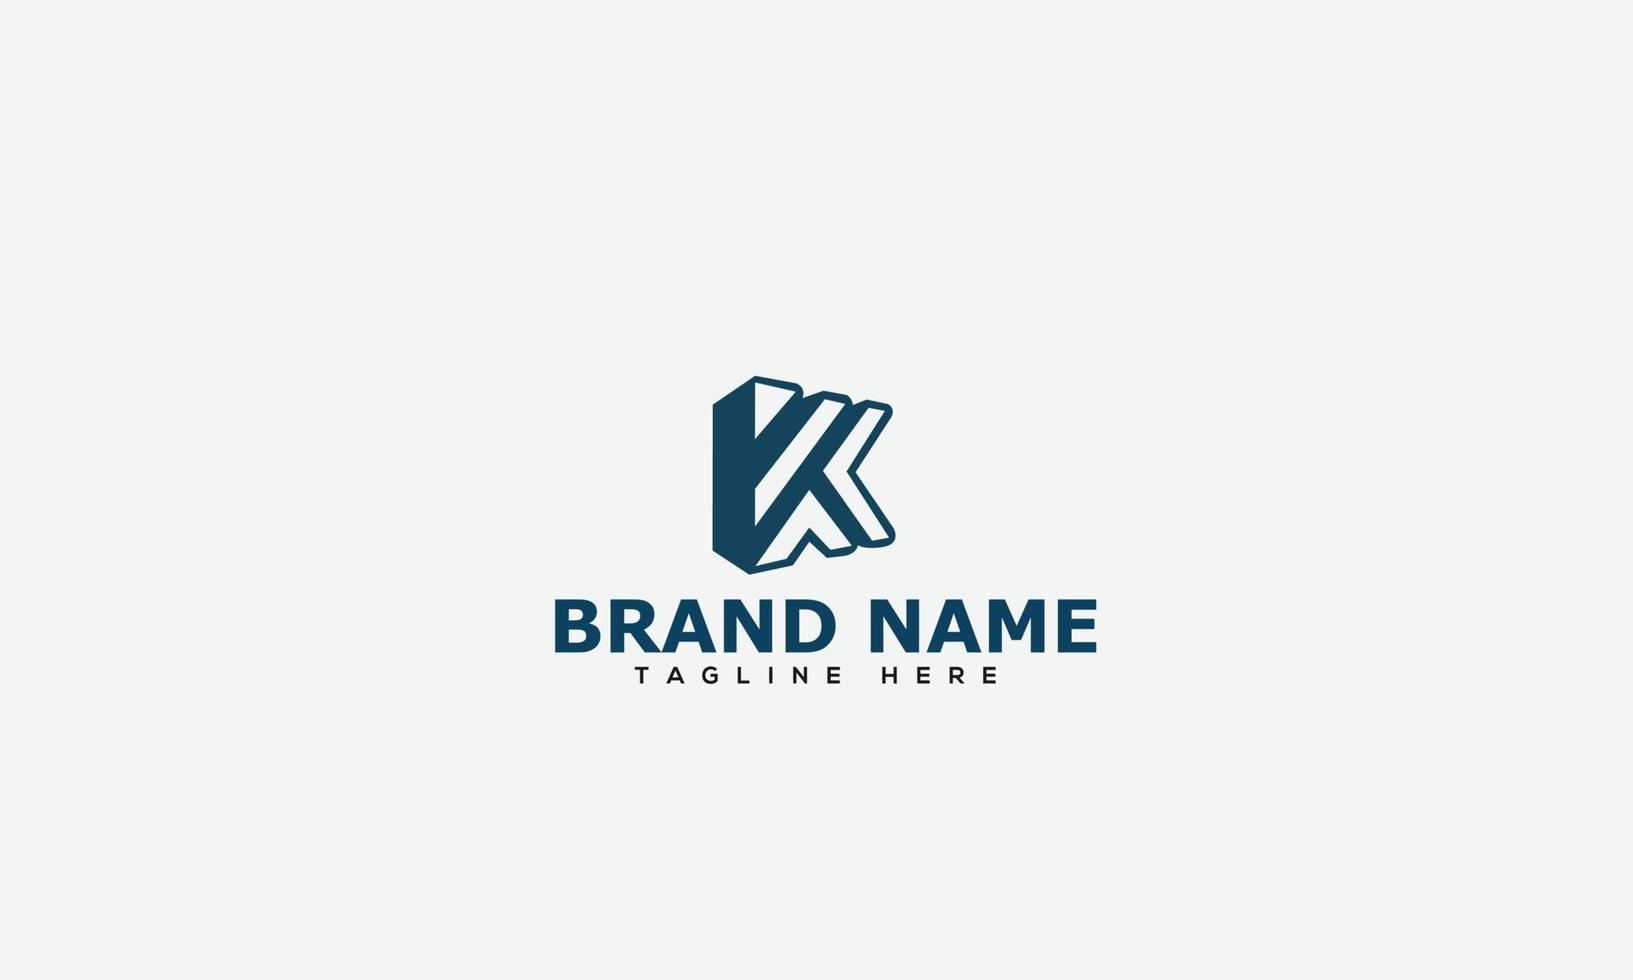 elemento de marca gráfico de vetor de modelo de design de logotipo k